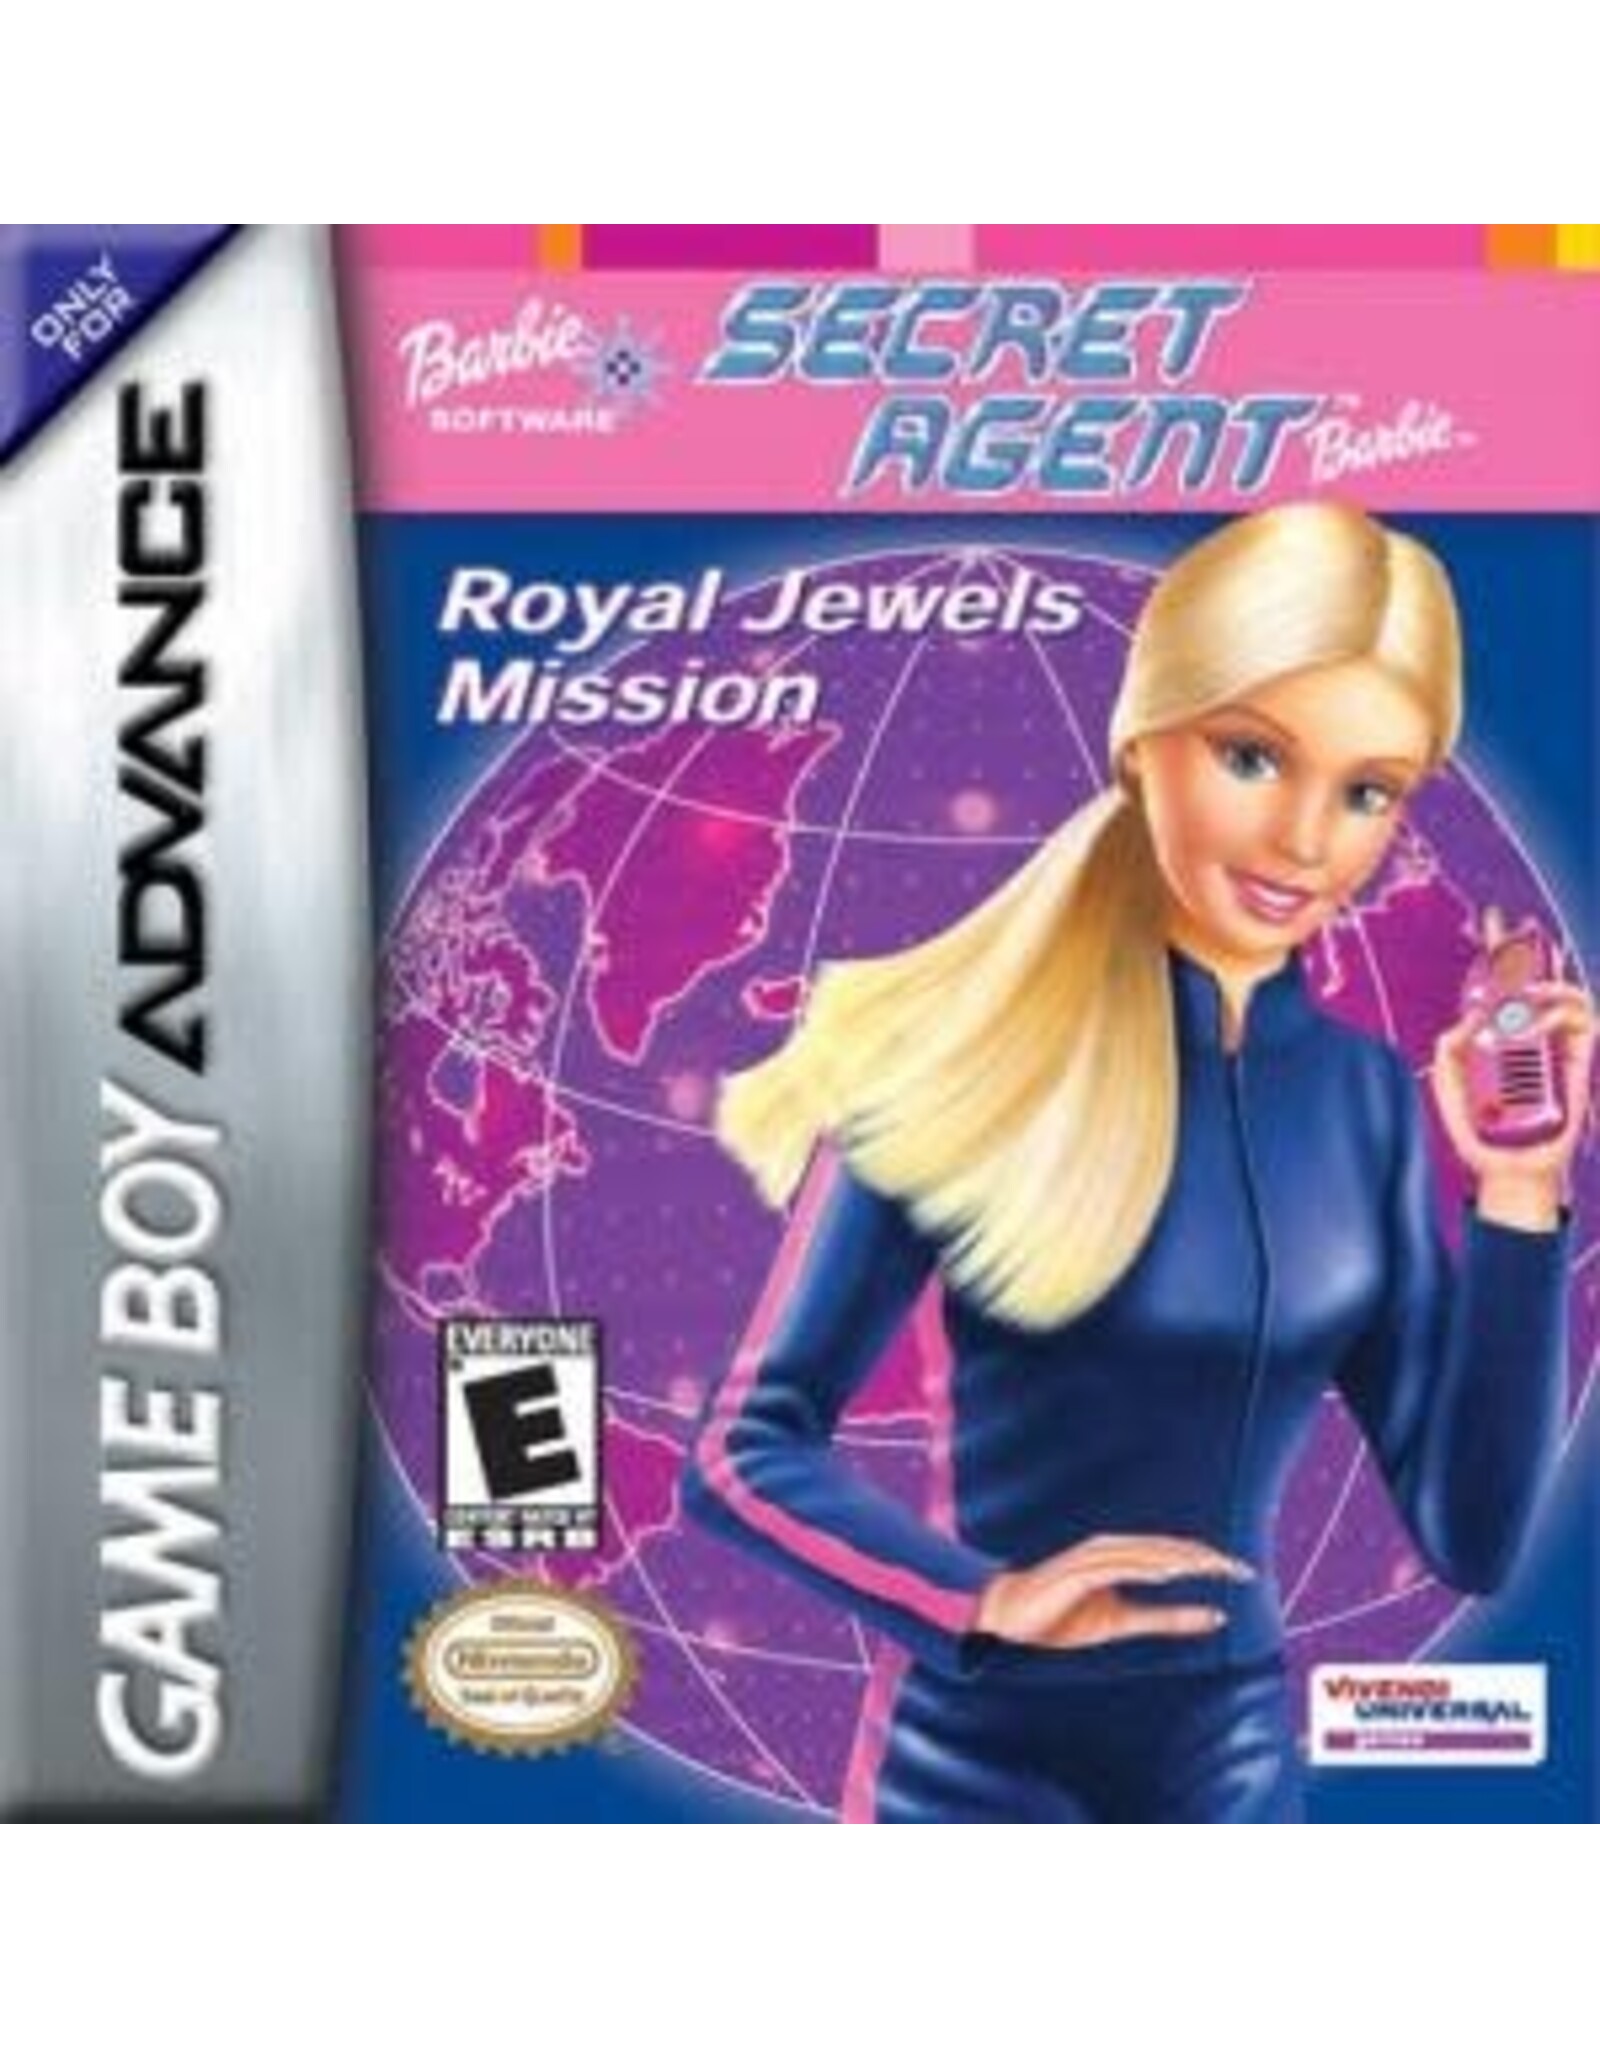 Game Boy Advance Barbie Secret Agent Barbie (Cart Only)